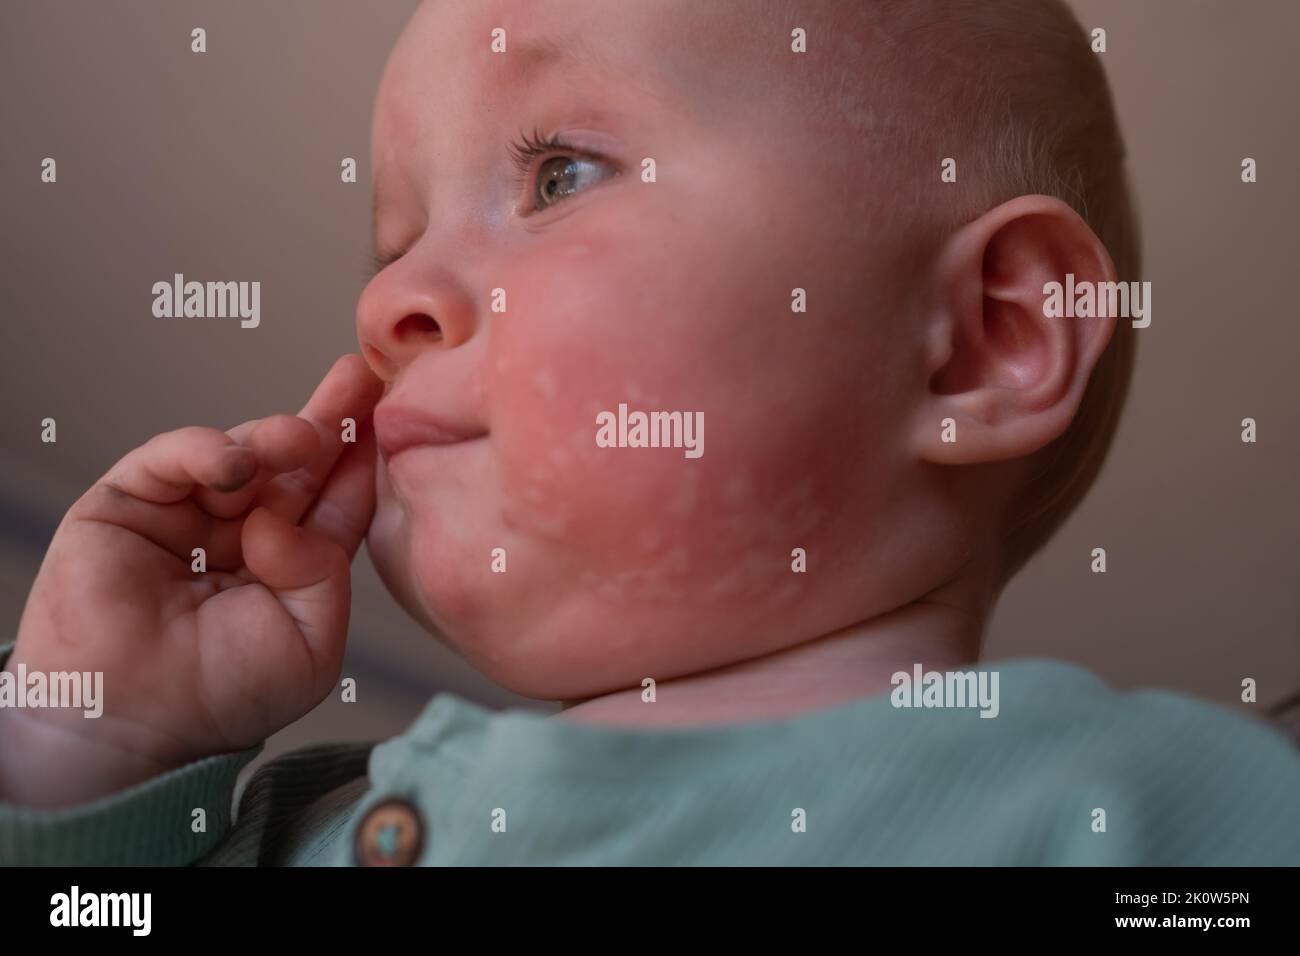 Nettle rash allergy on face in a toddler face. Stock Photo